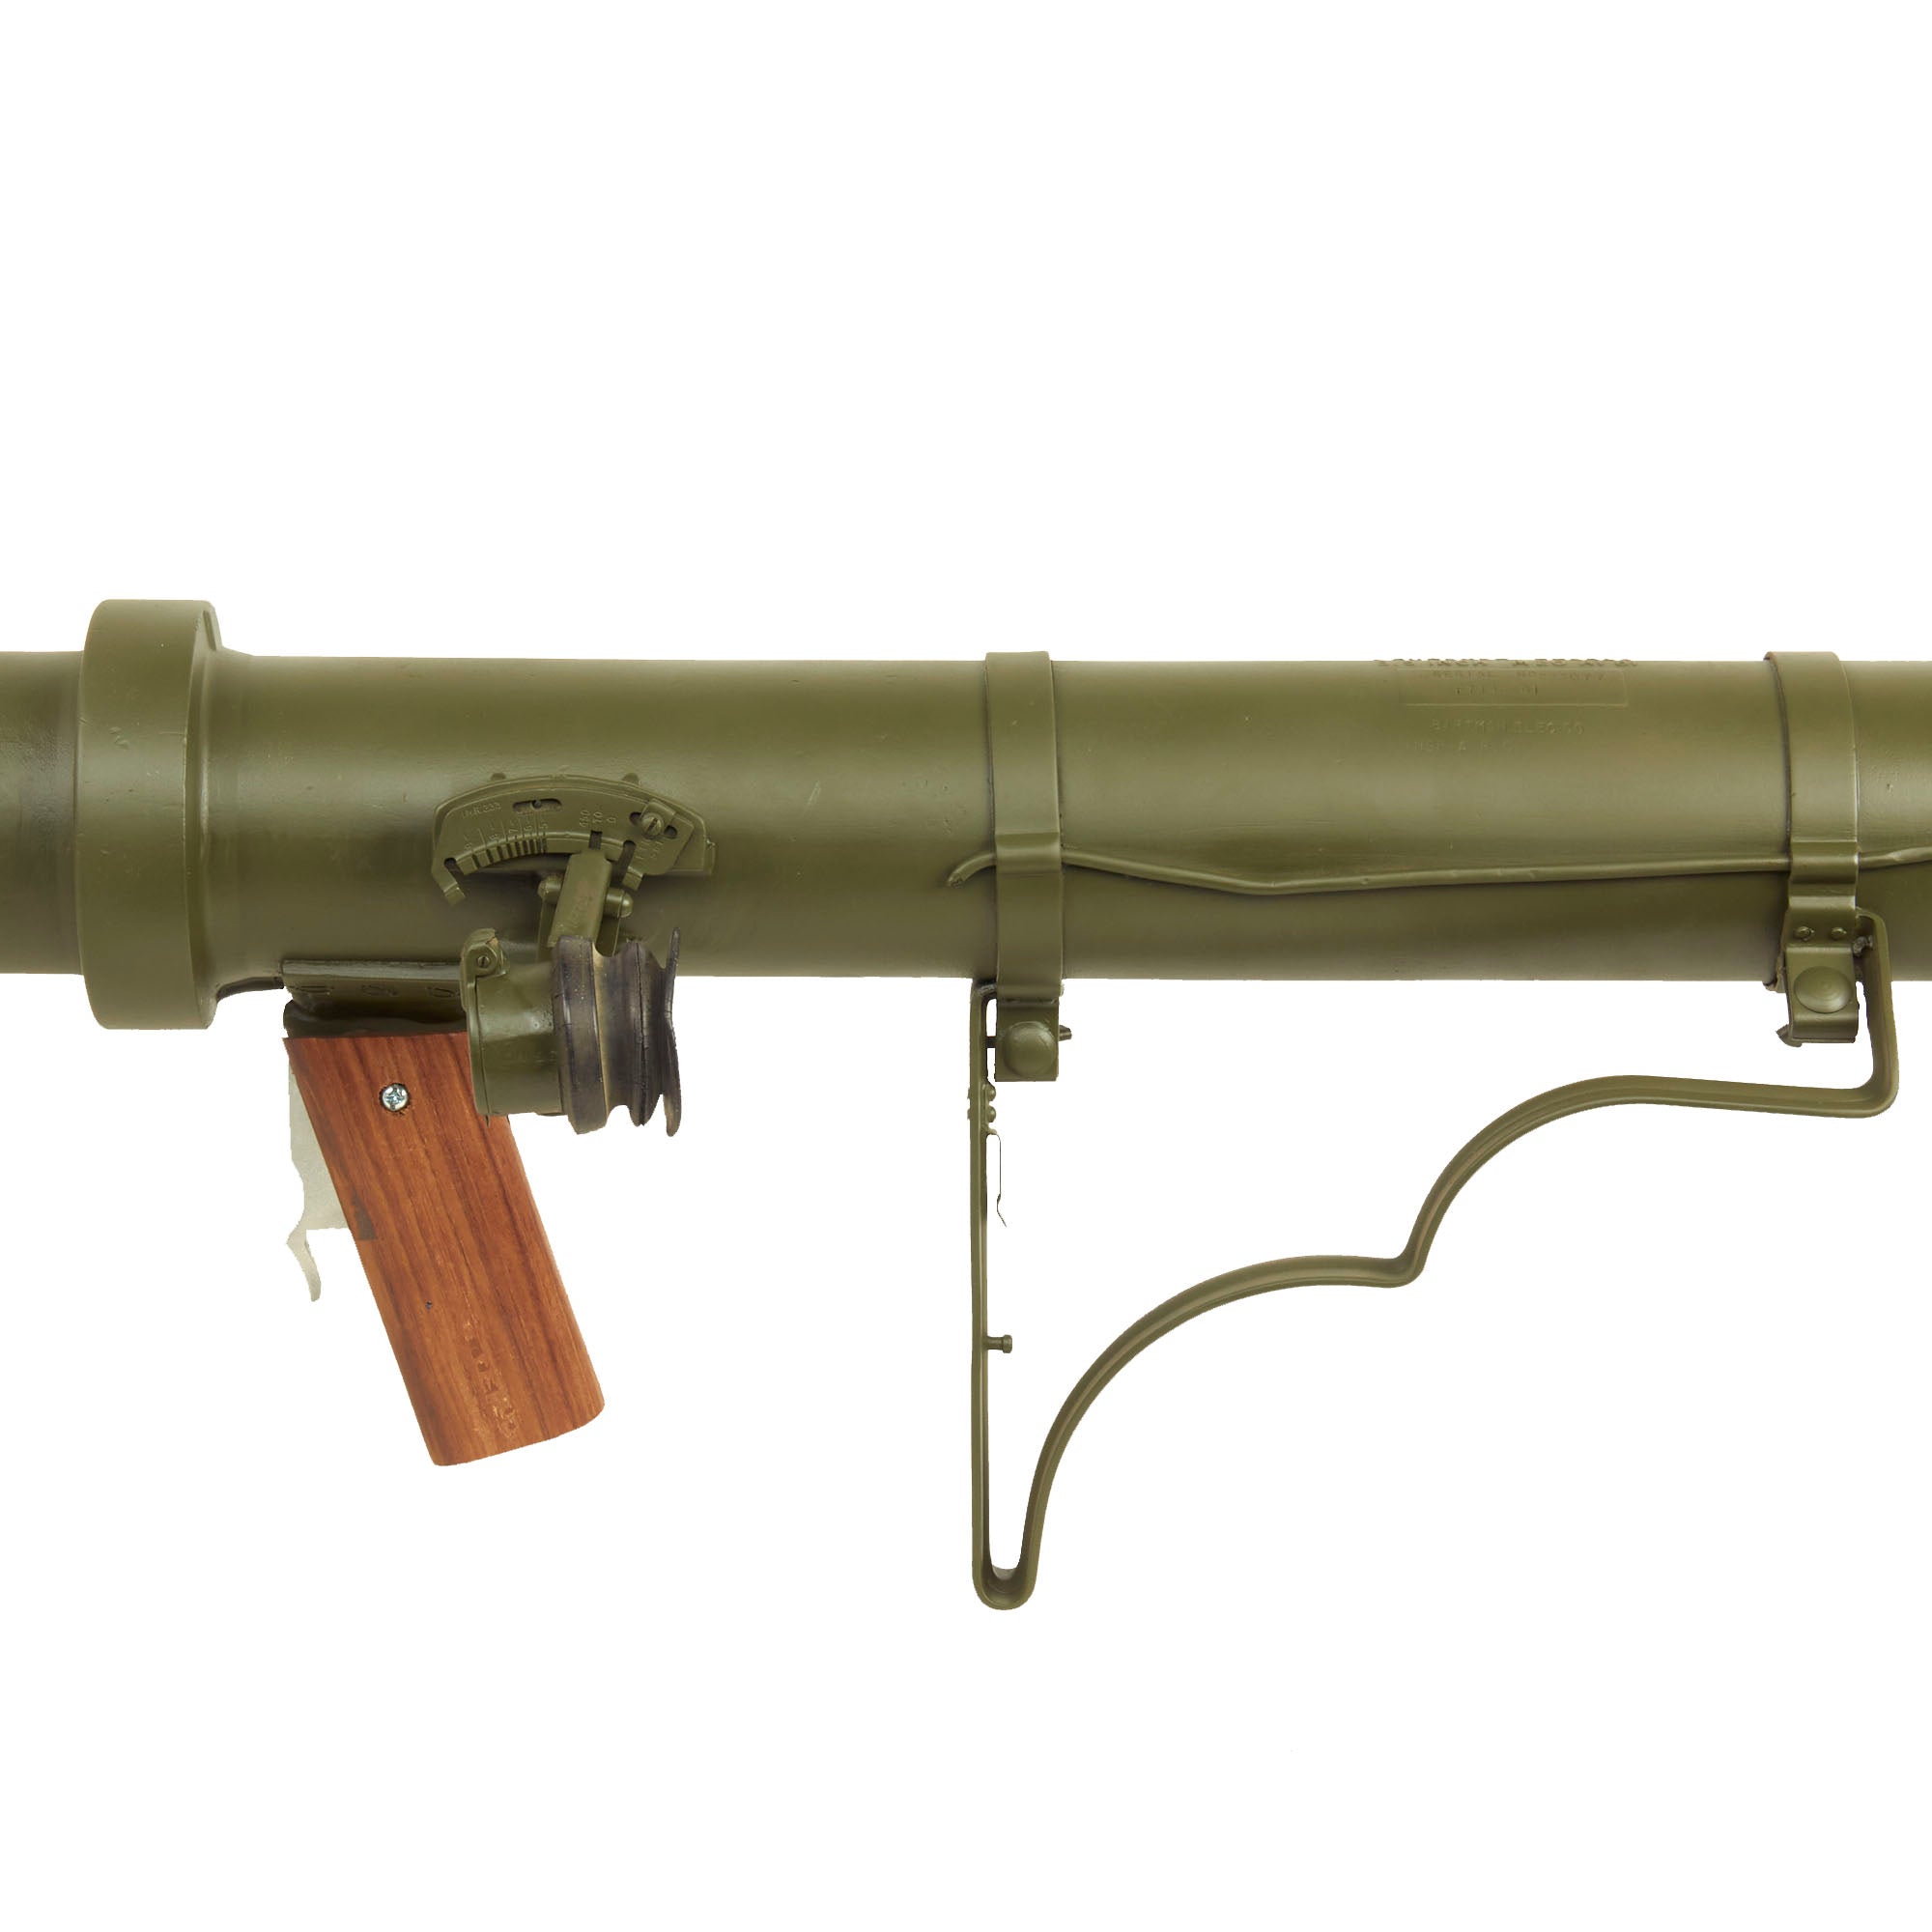 Original U.S. M20 A1 B1 3.5 Inch Super Bazooka Inert Rocket